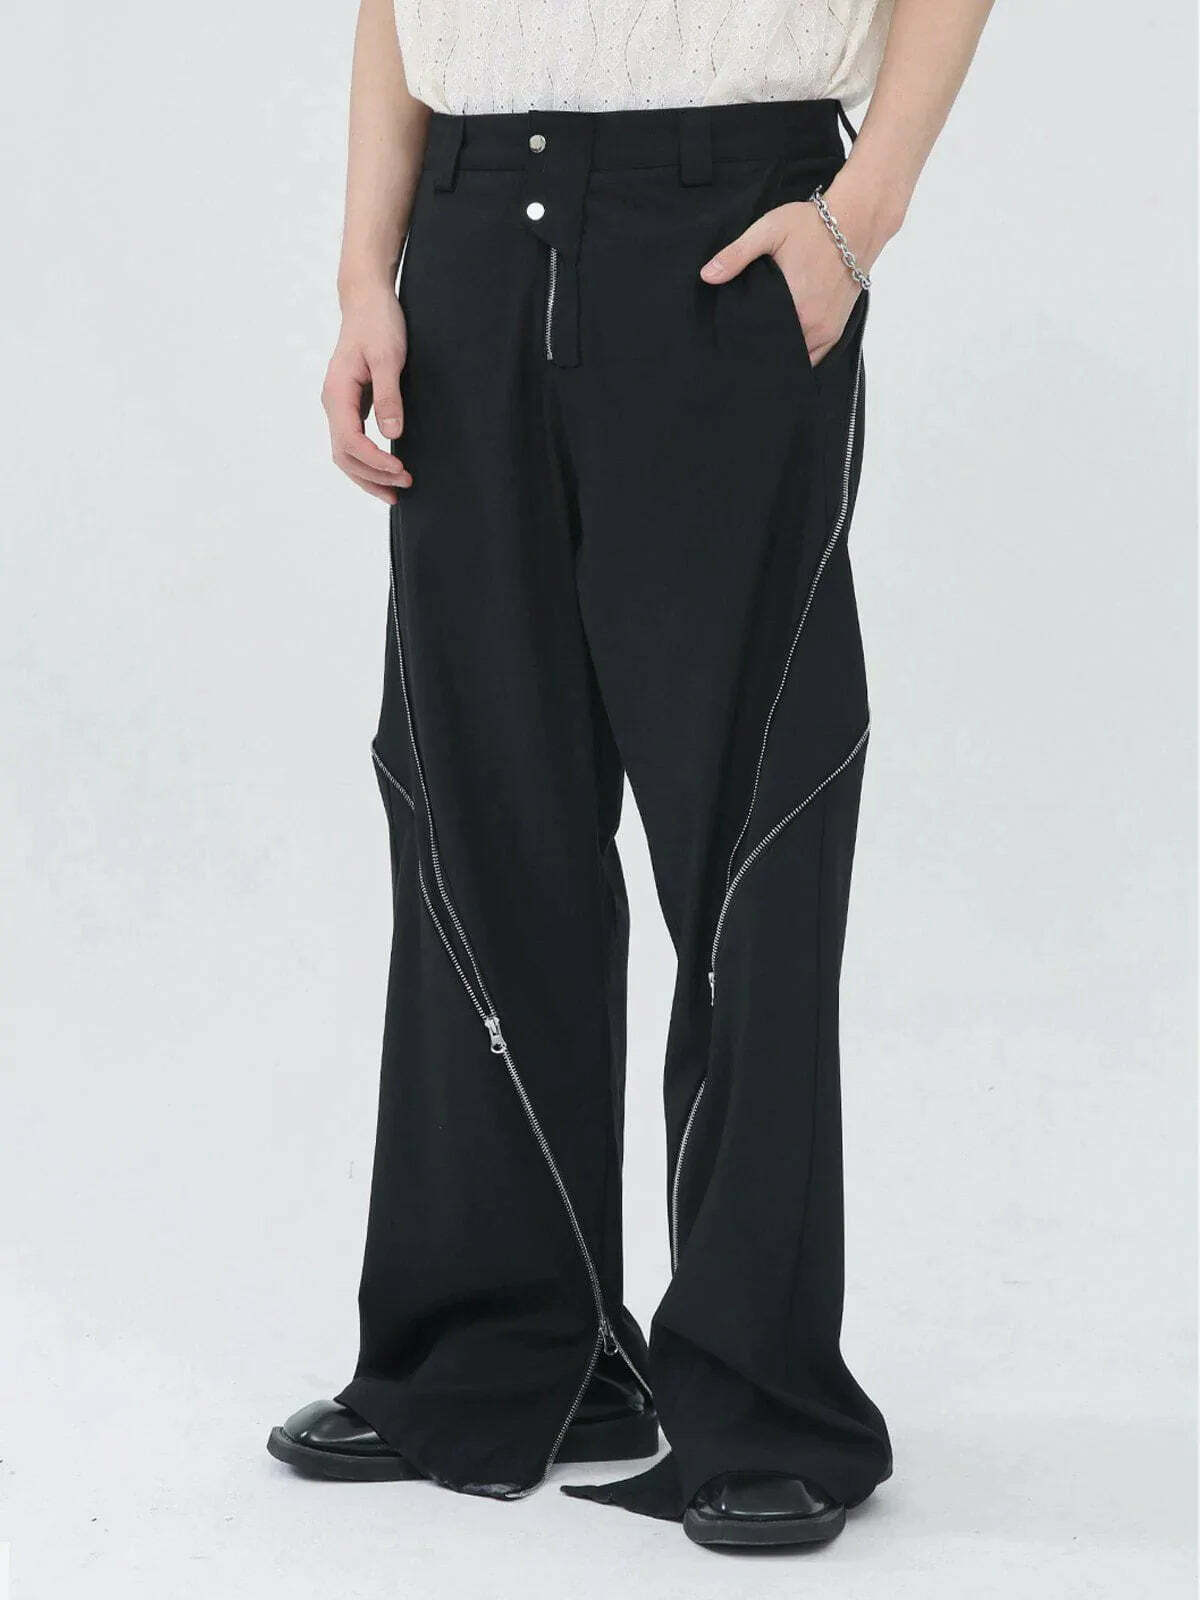 split zipup pants edgy & versatile streetwear 8023